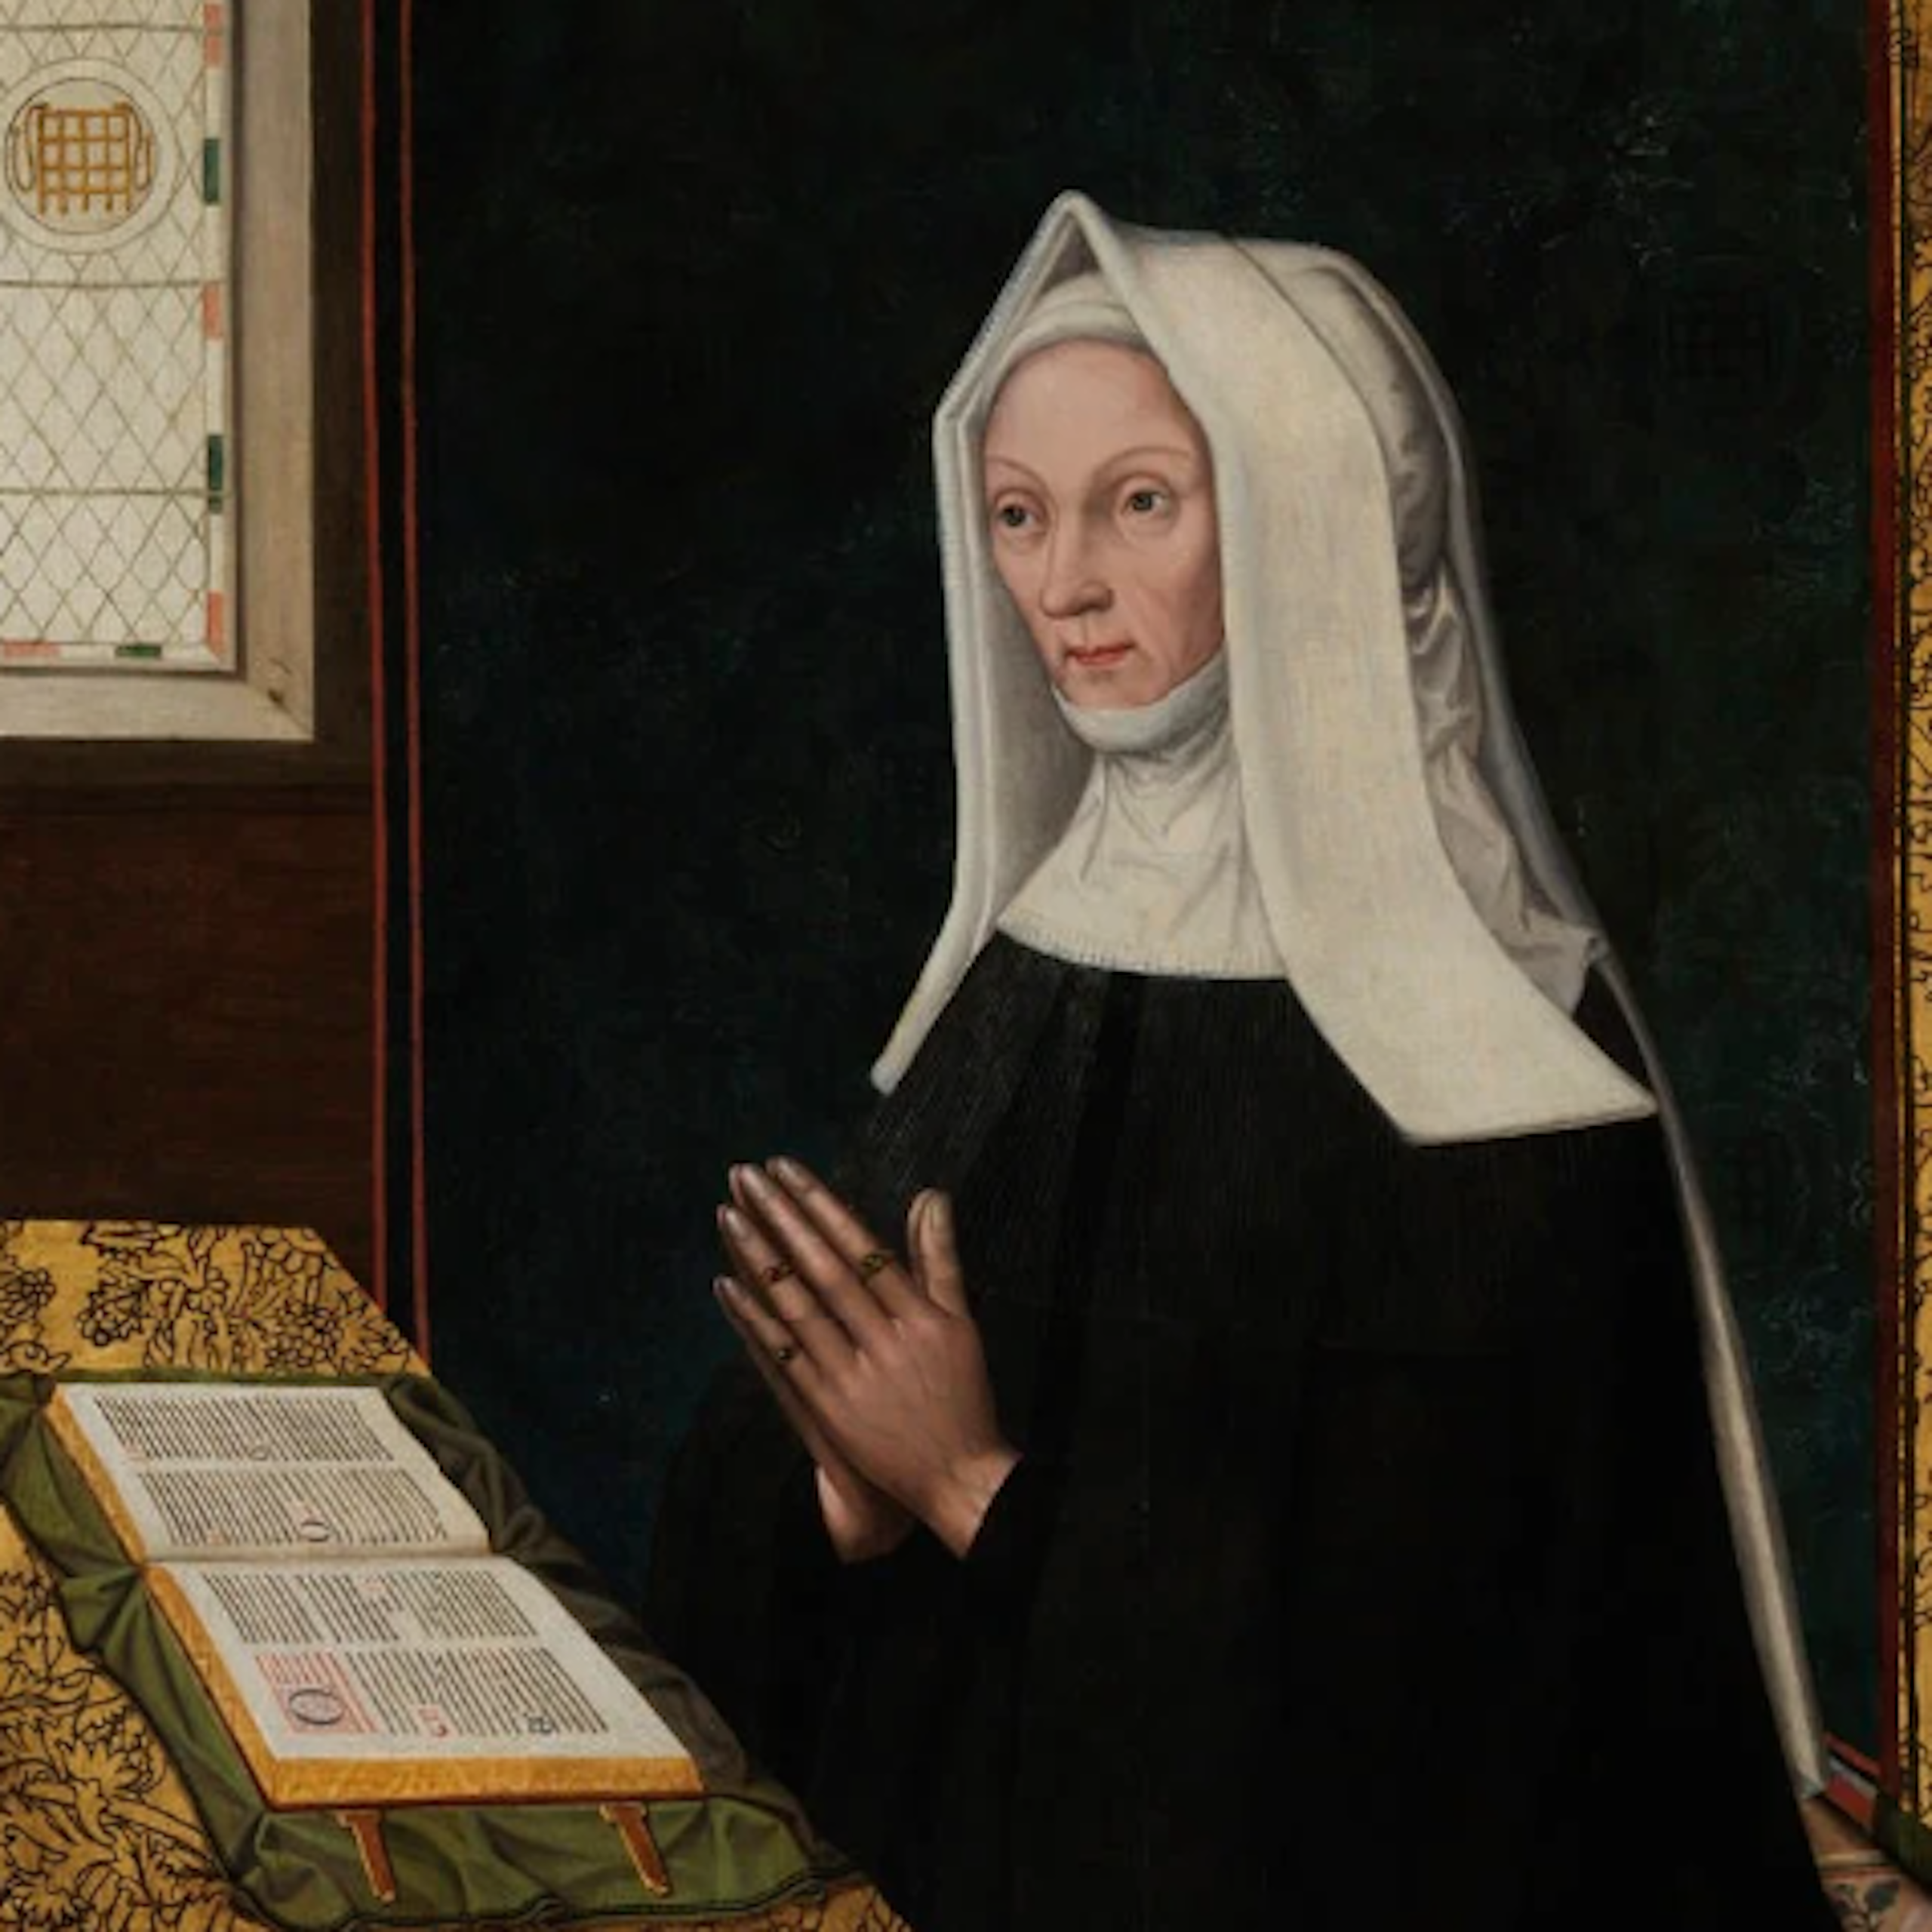 Portrait of Lady Margaret Beaufort praying in a habit.